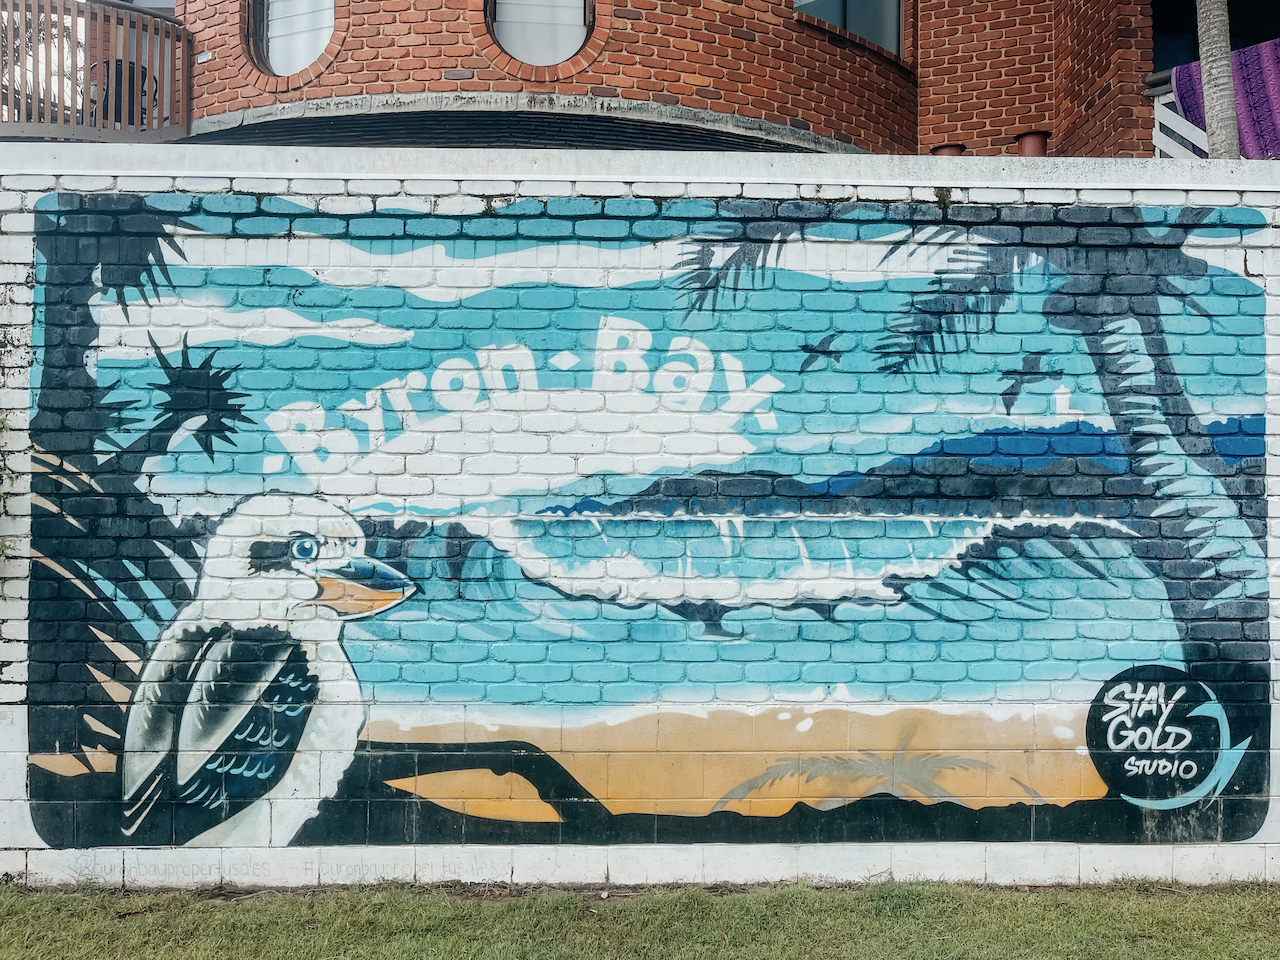 Graffiti d'un kooaburra  - Byron Bay - New South Wales - Australie